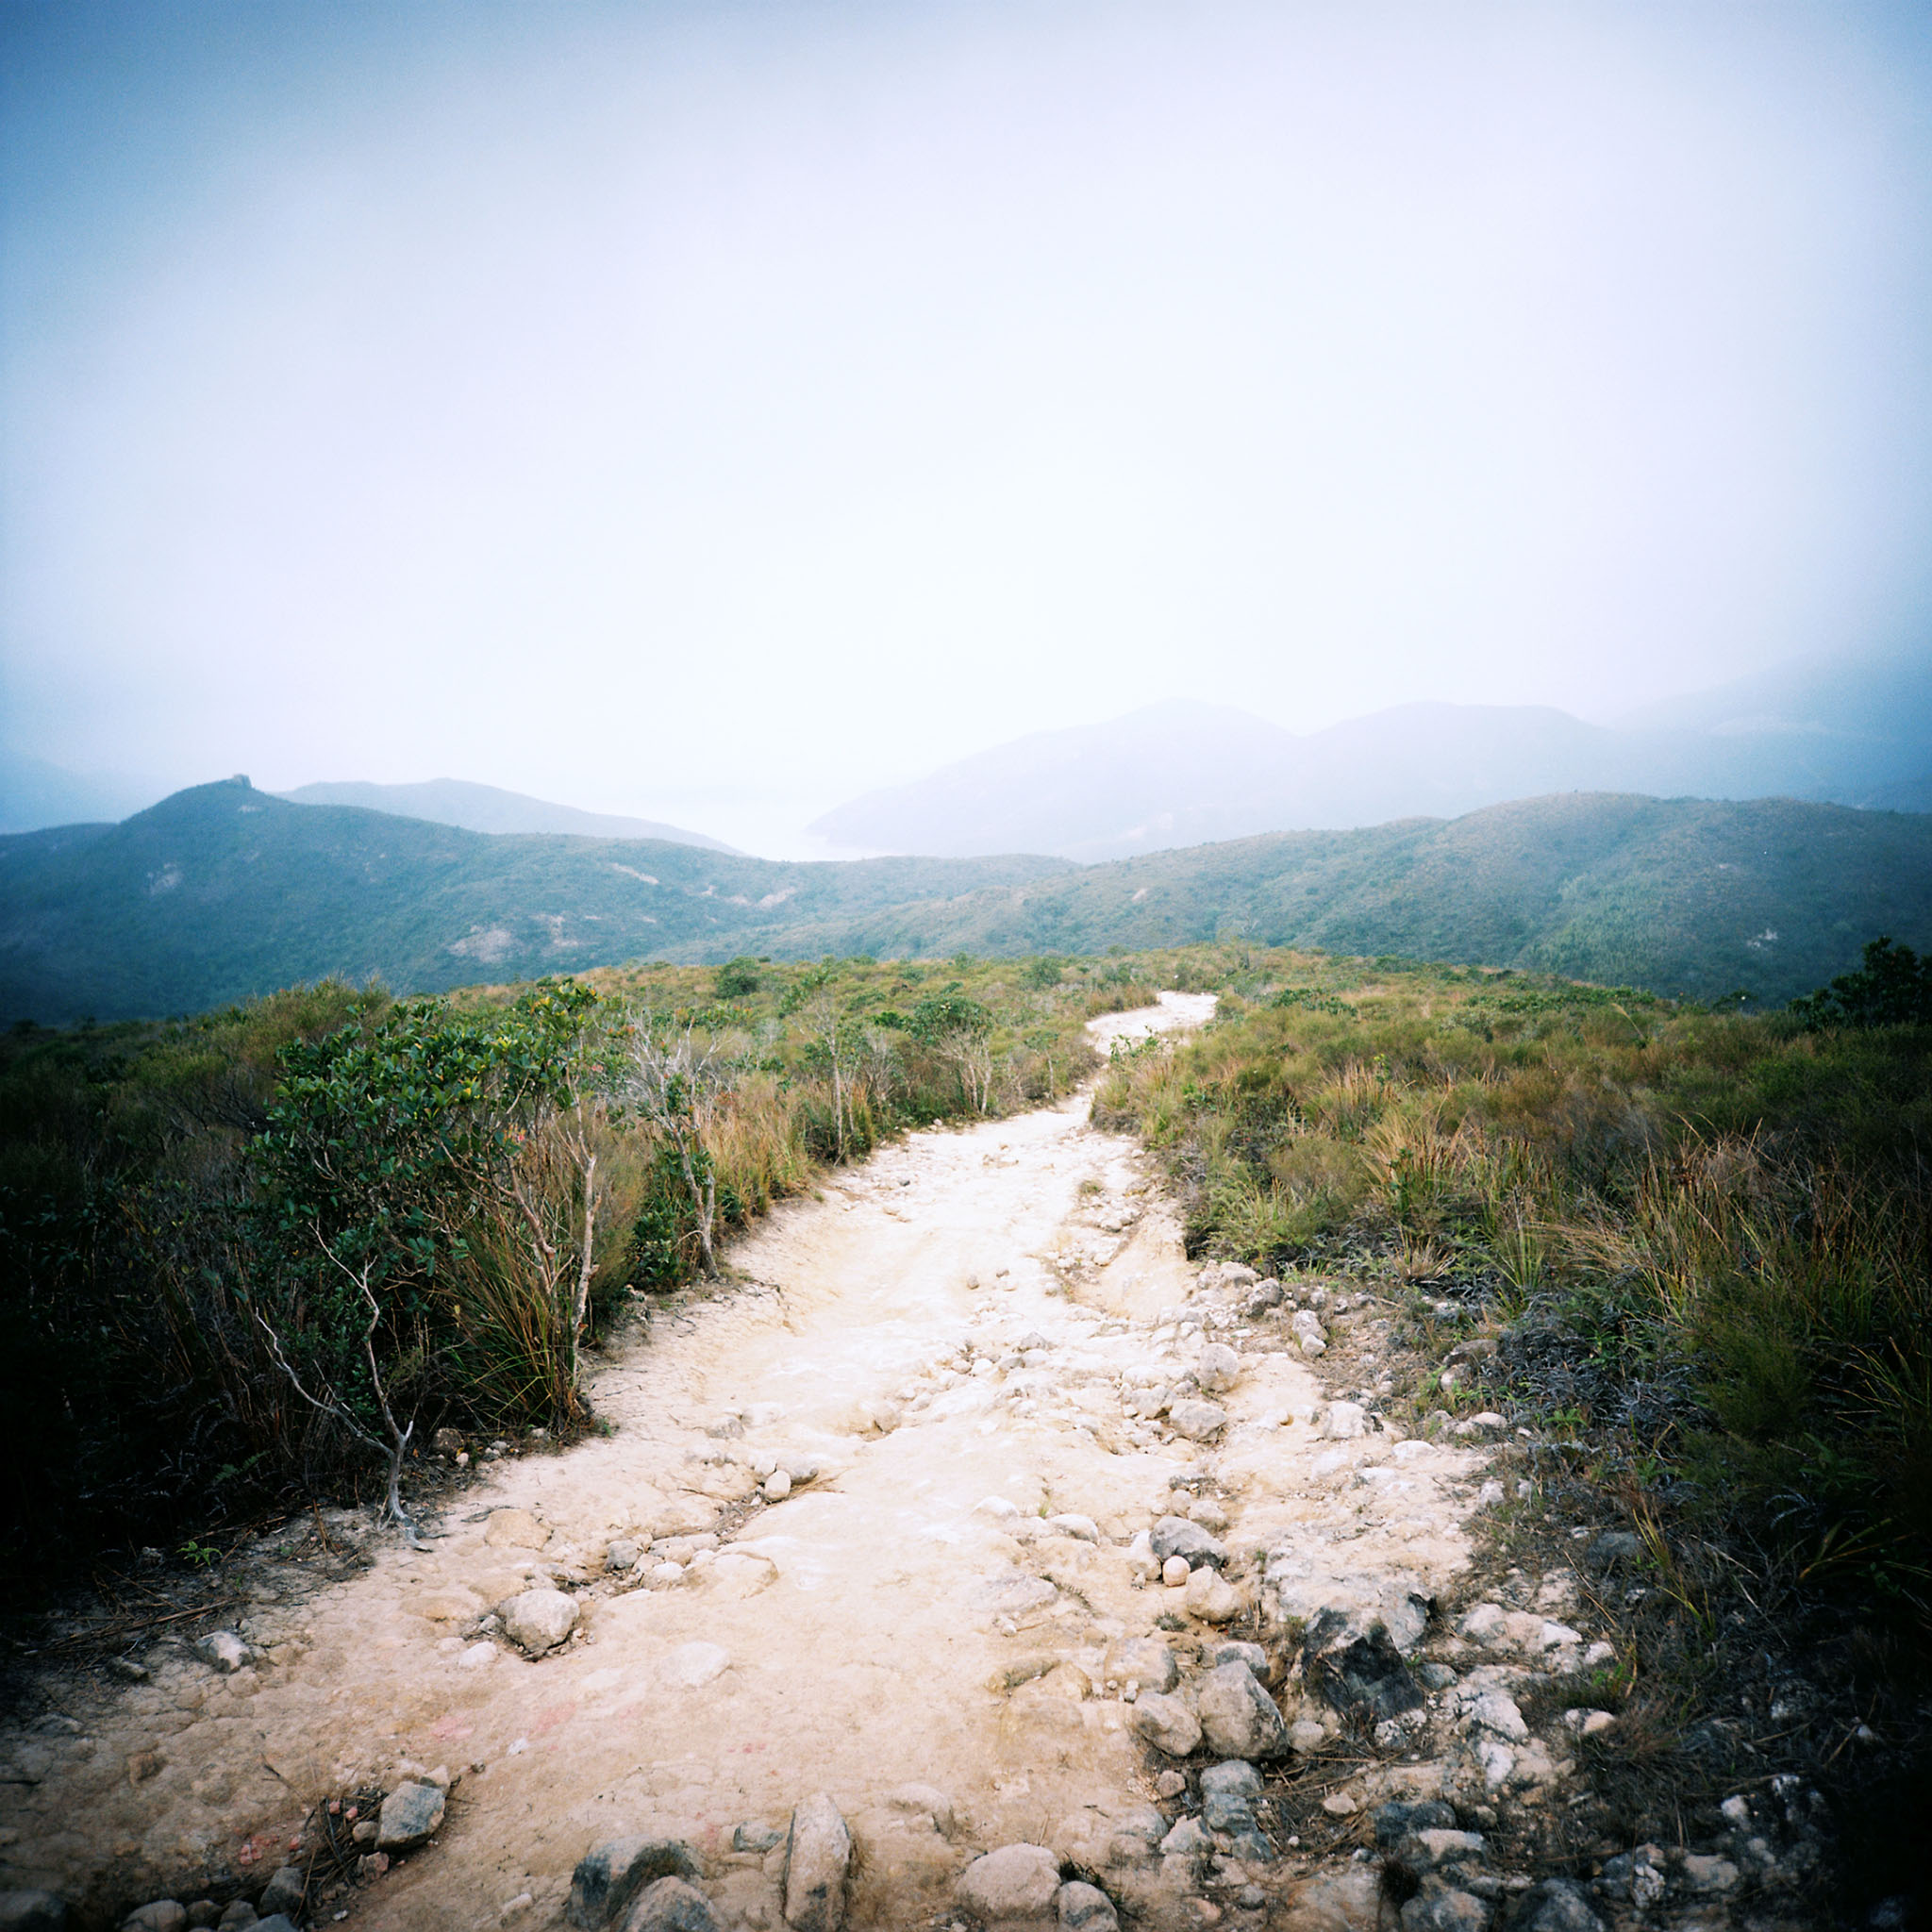 img/1802-hongkong-hiking-maclehose-trail/tat-tso-1802-hongkong-hiking-maclehose-trail-03.jpg